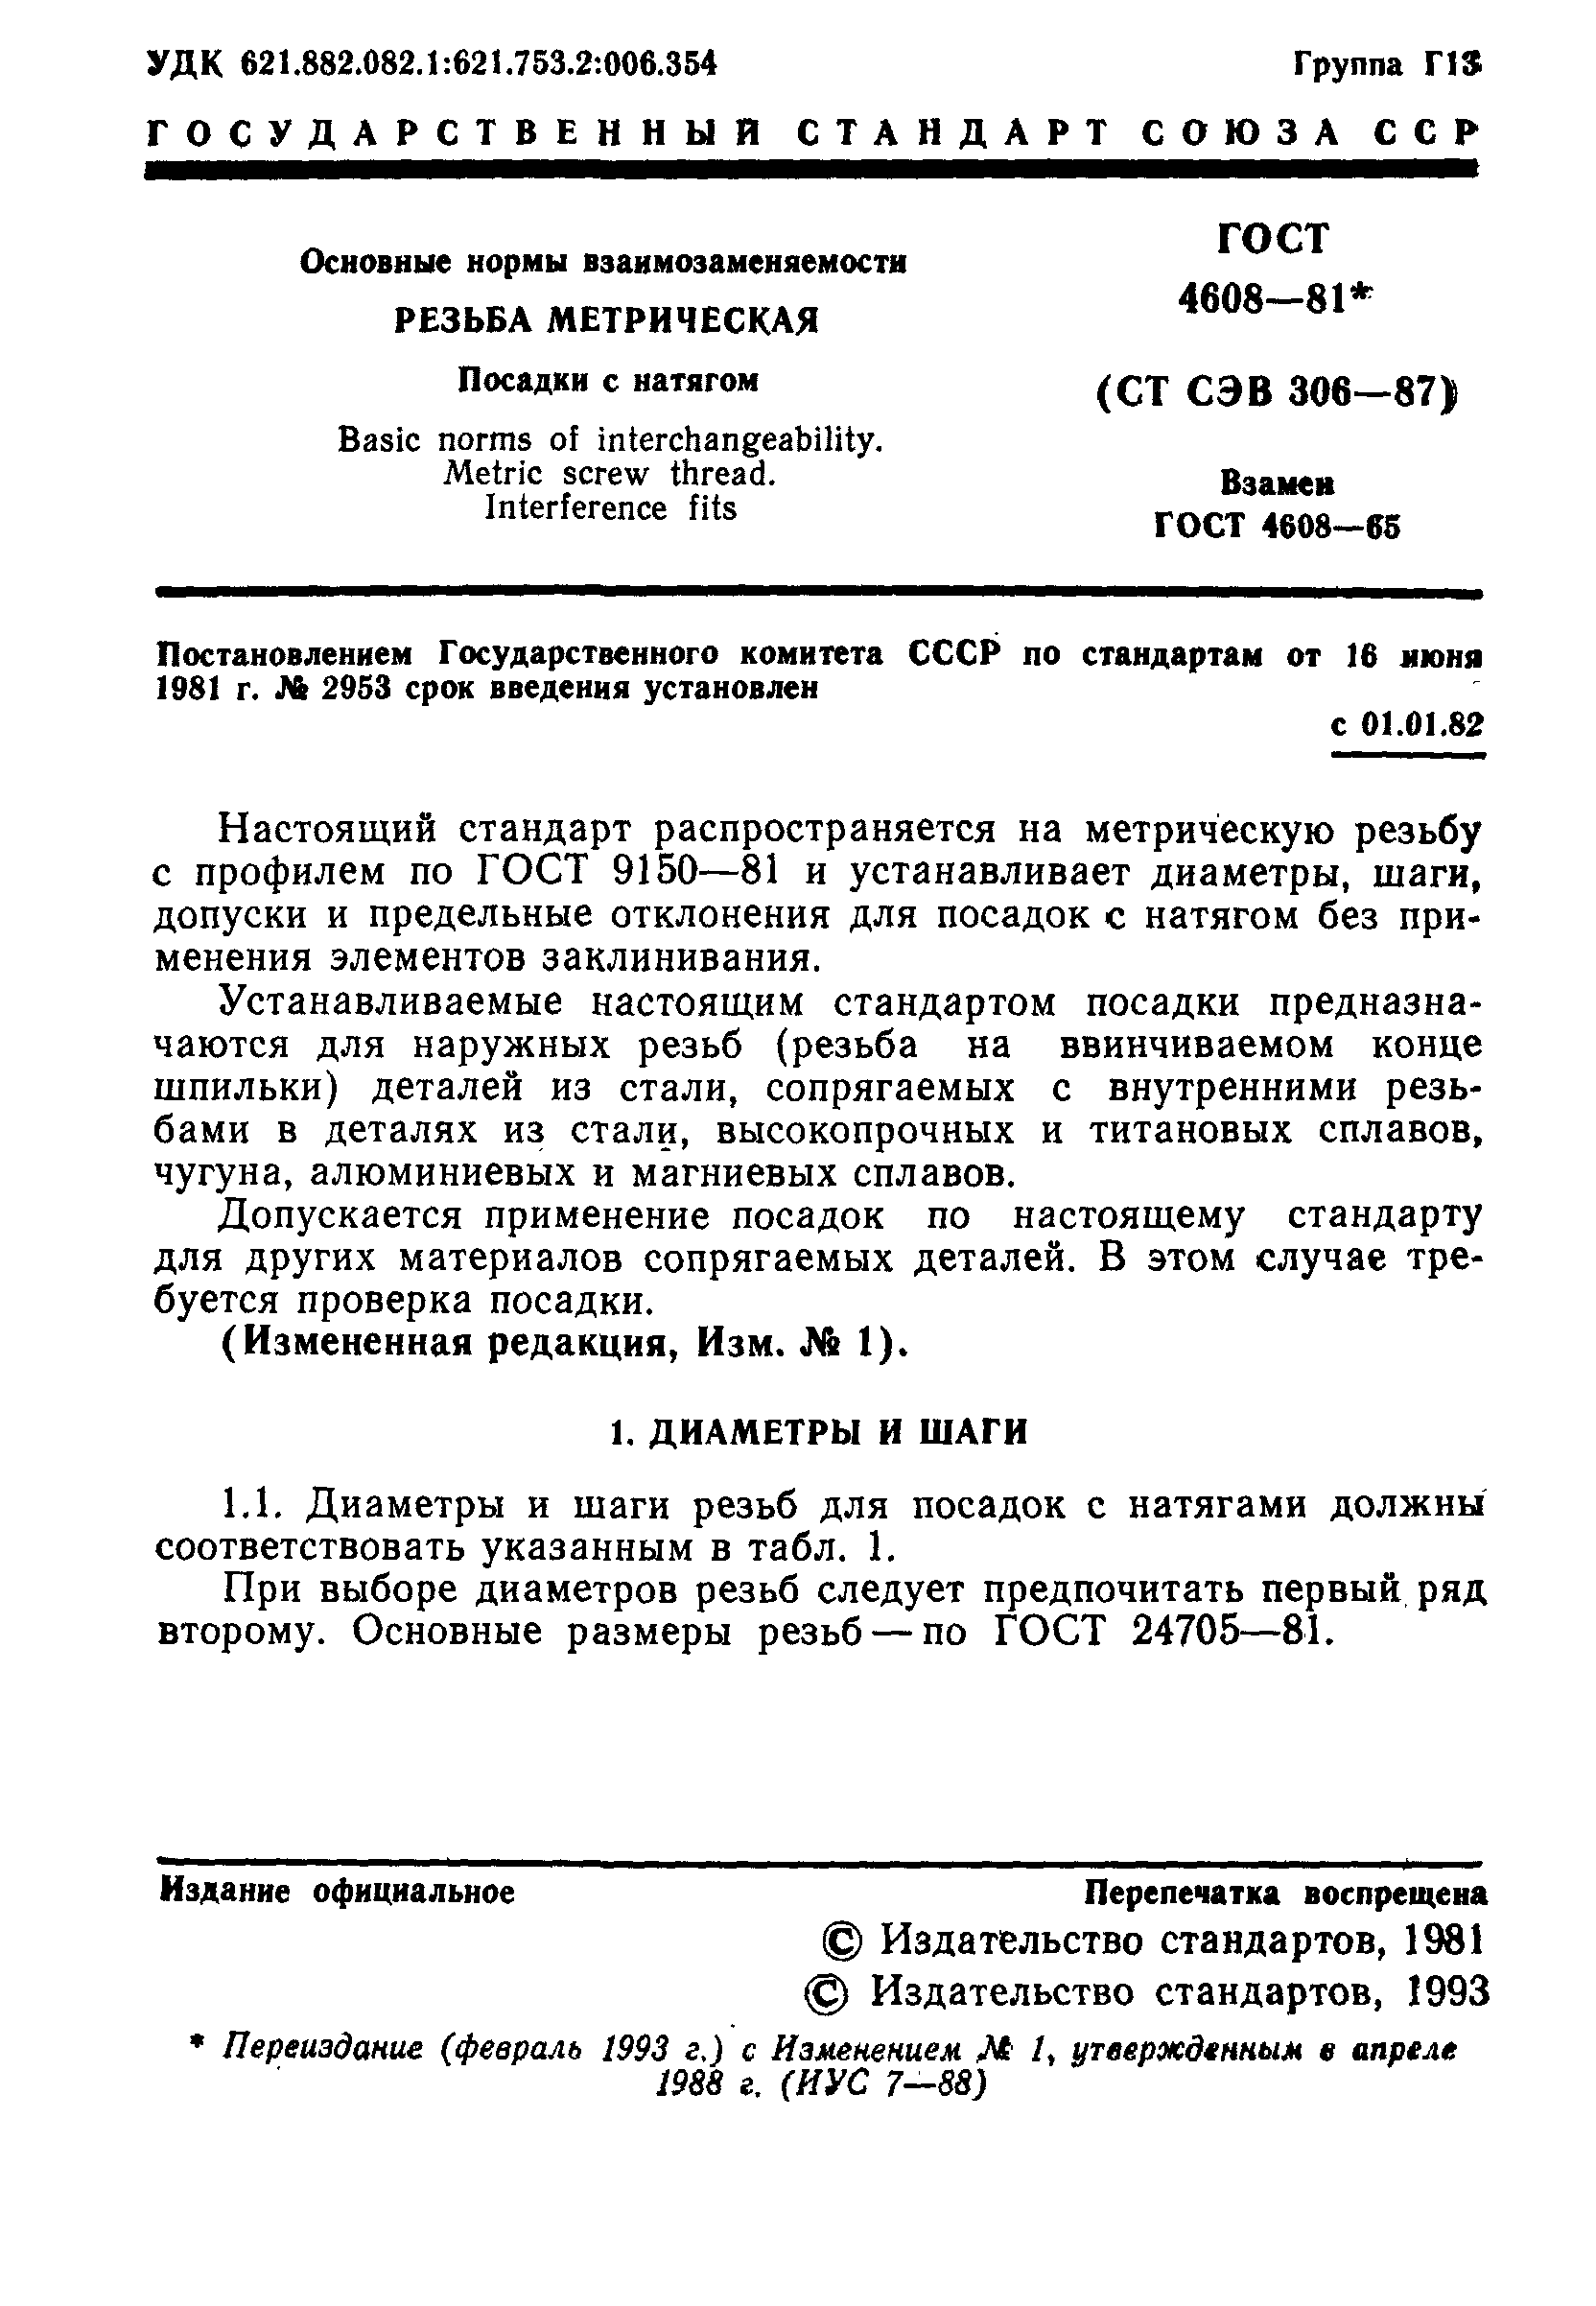 ГОСТ 4608-81